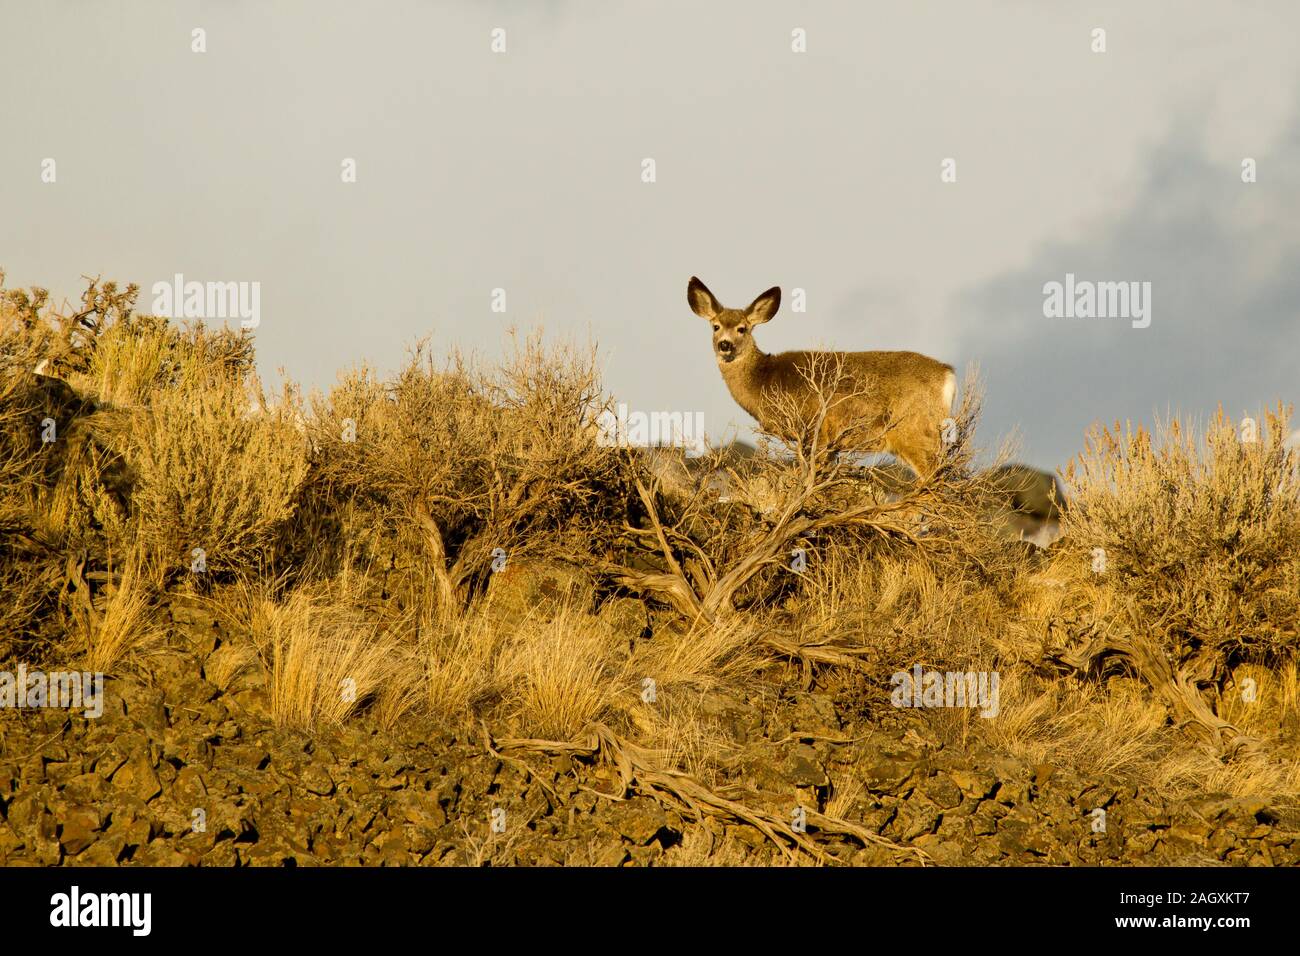 Mule deer or Blacktail deer (Odocoileus hemionus columbianus) Stock Photo